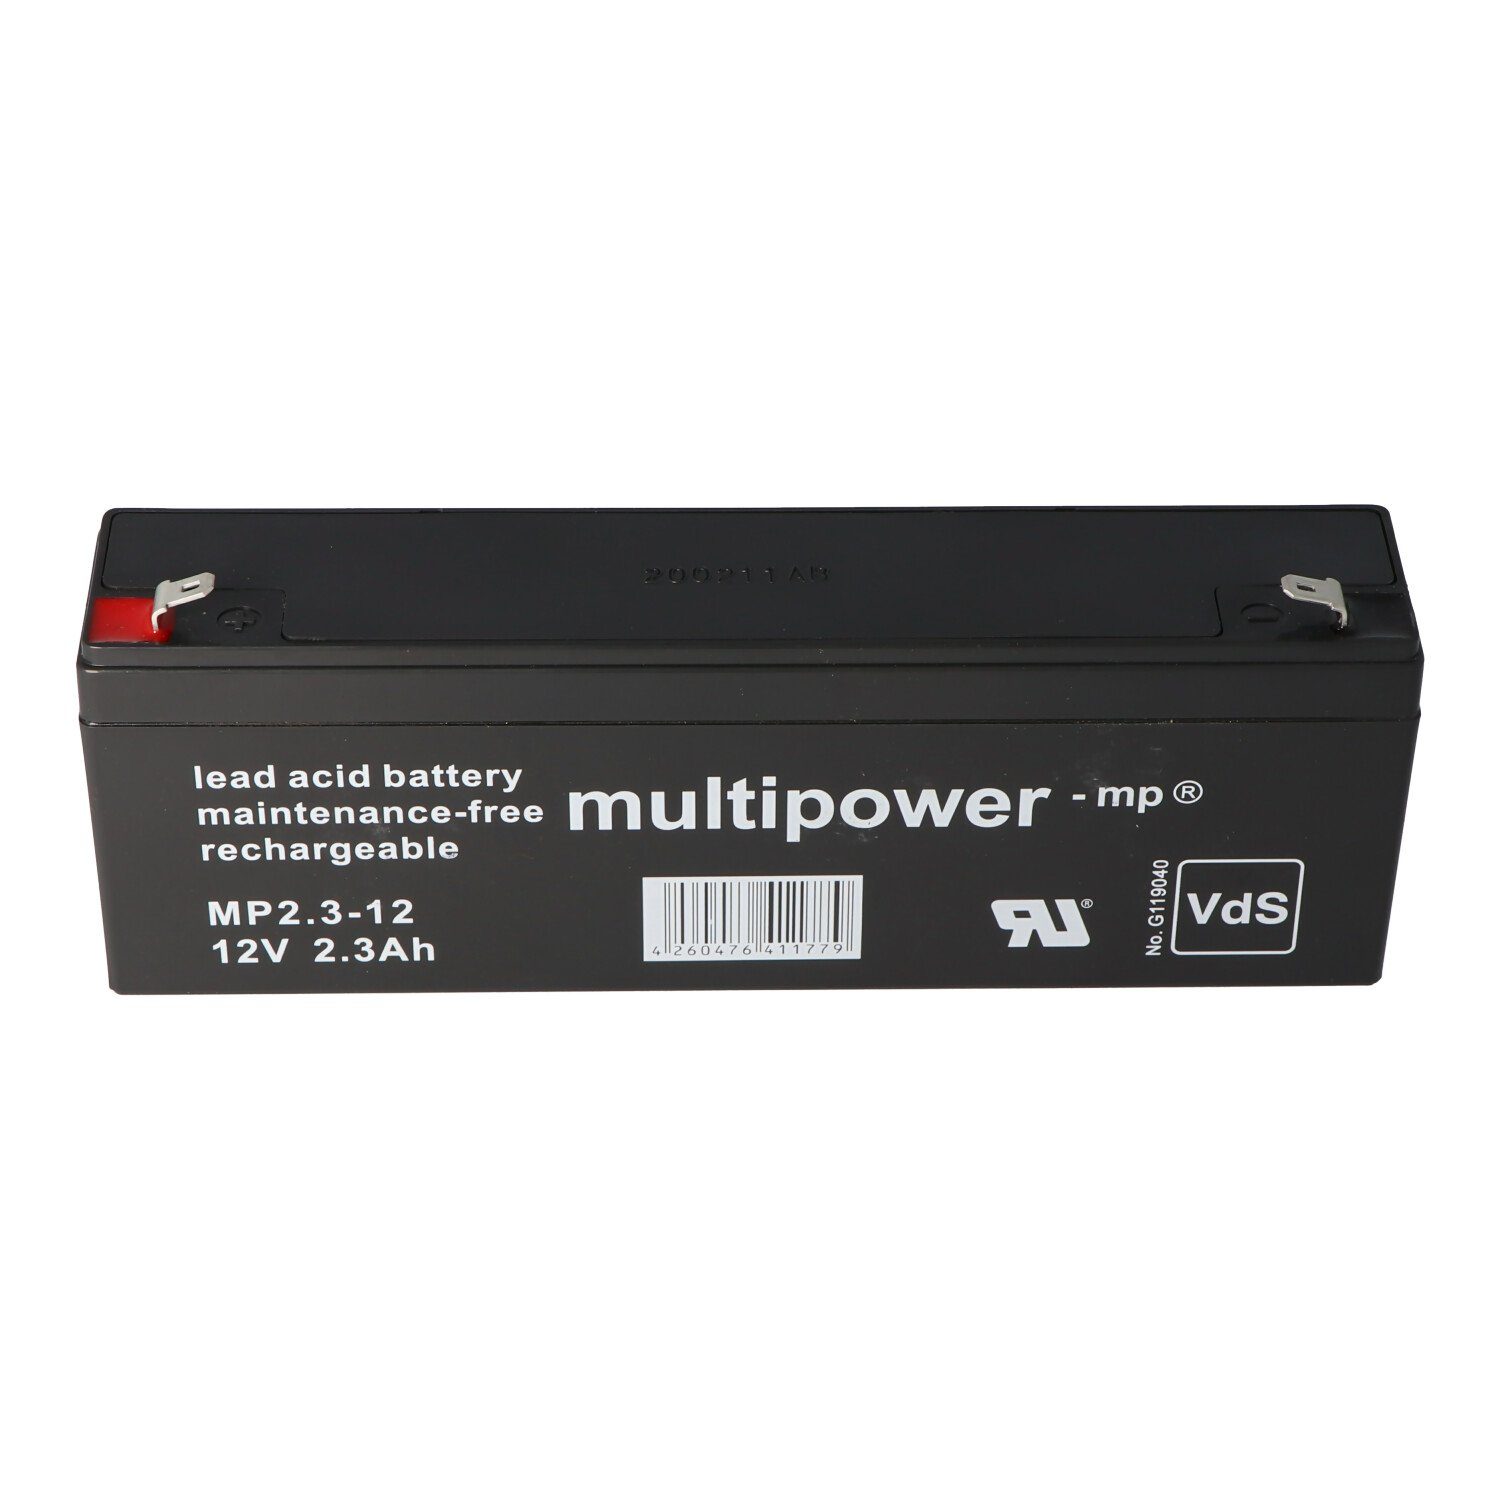 Multipower (12,0 4,8mm Akku MP2.3-12 Stecker, Blei mAh 2300 V) Multipowe Akku, Multipower Faston früher